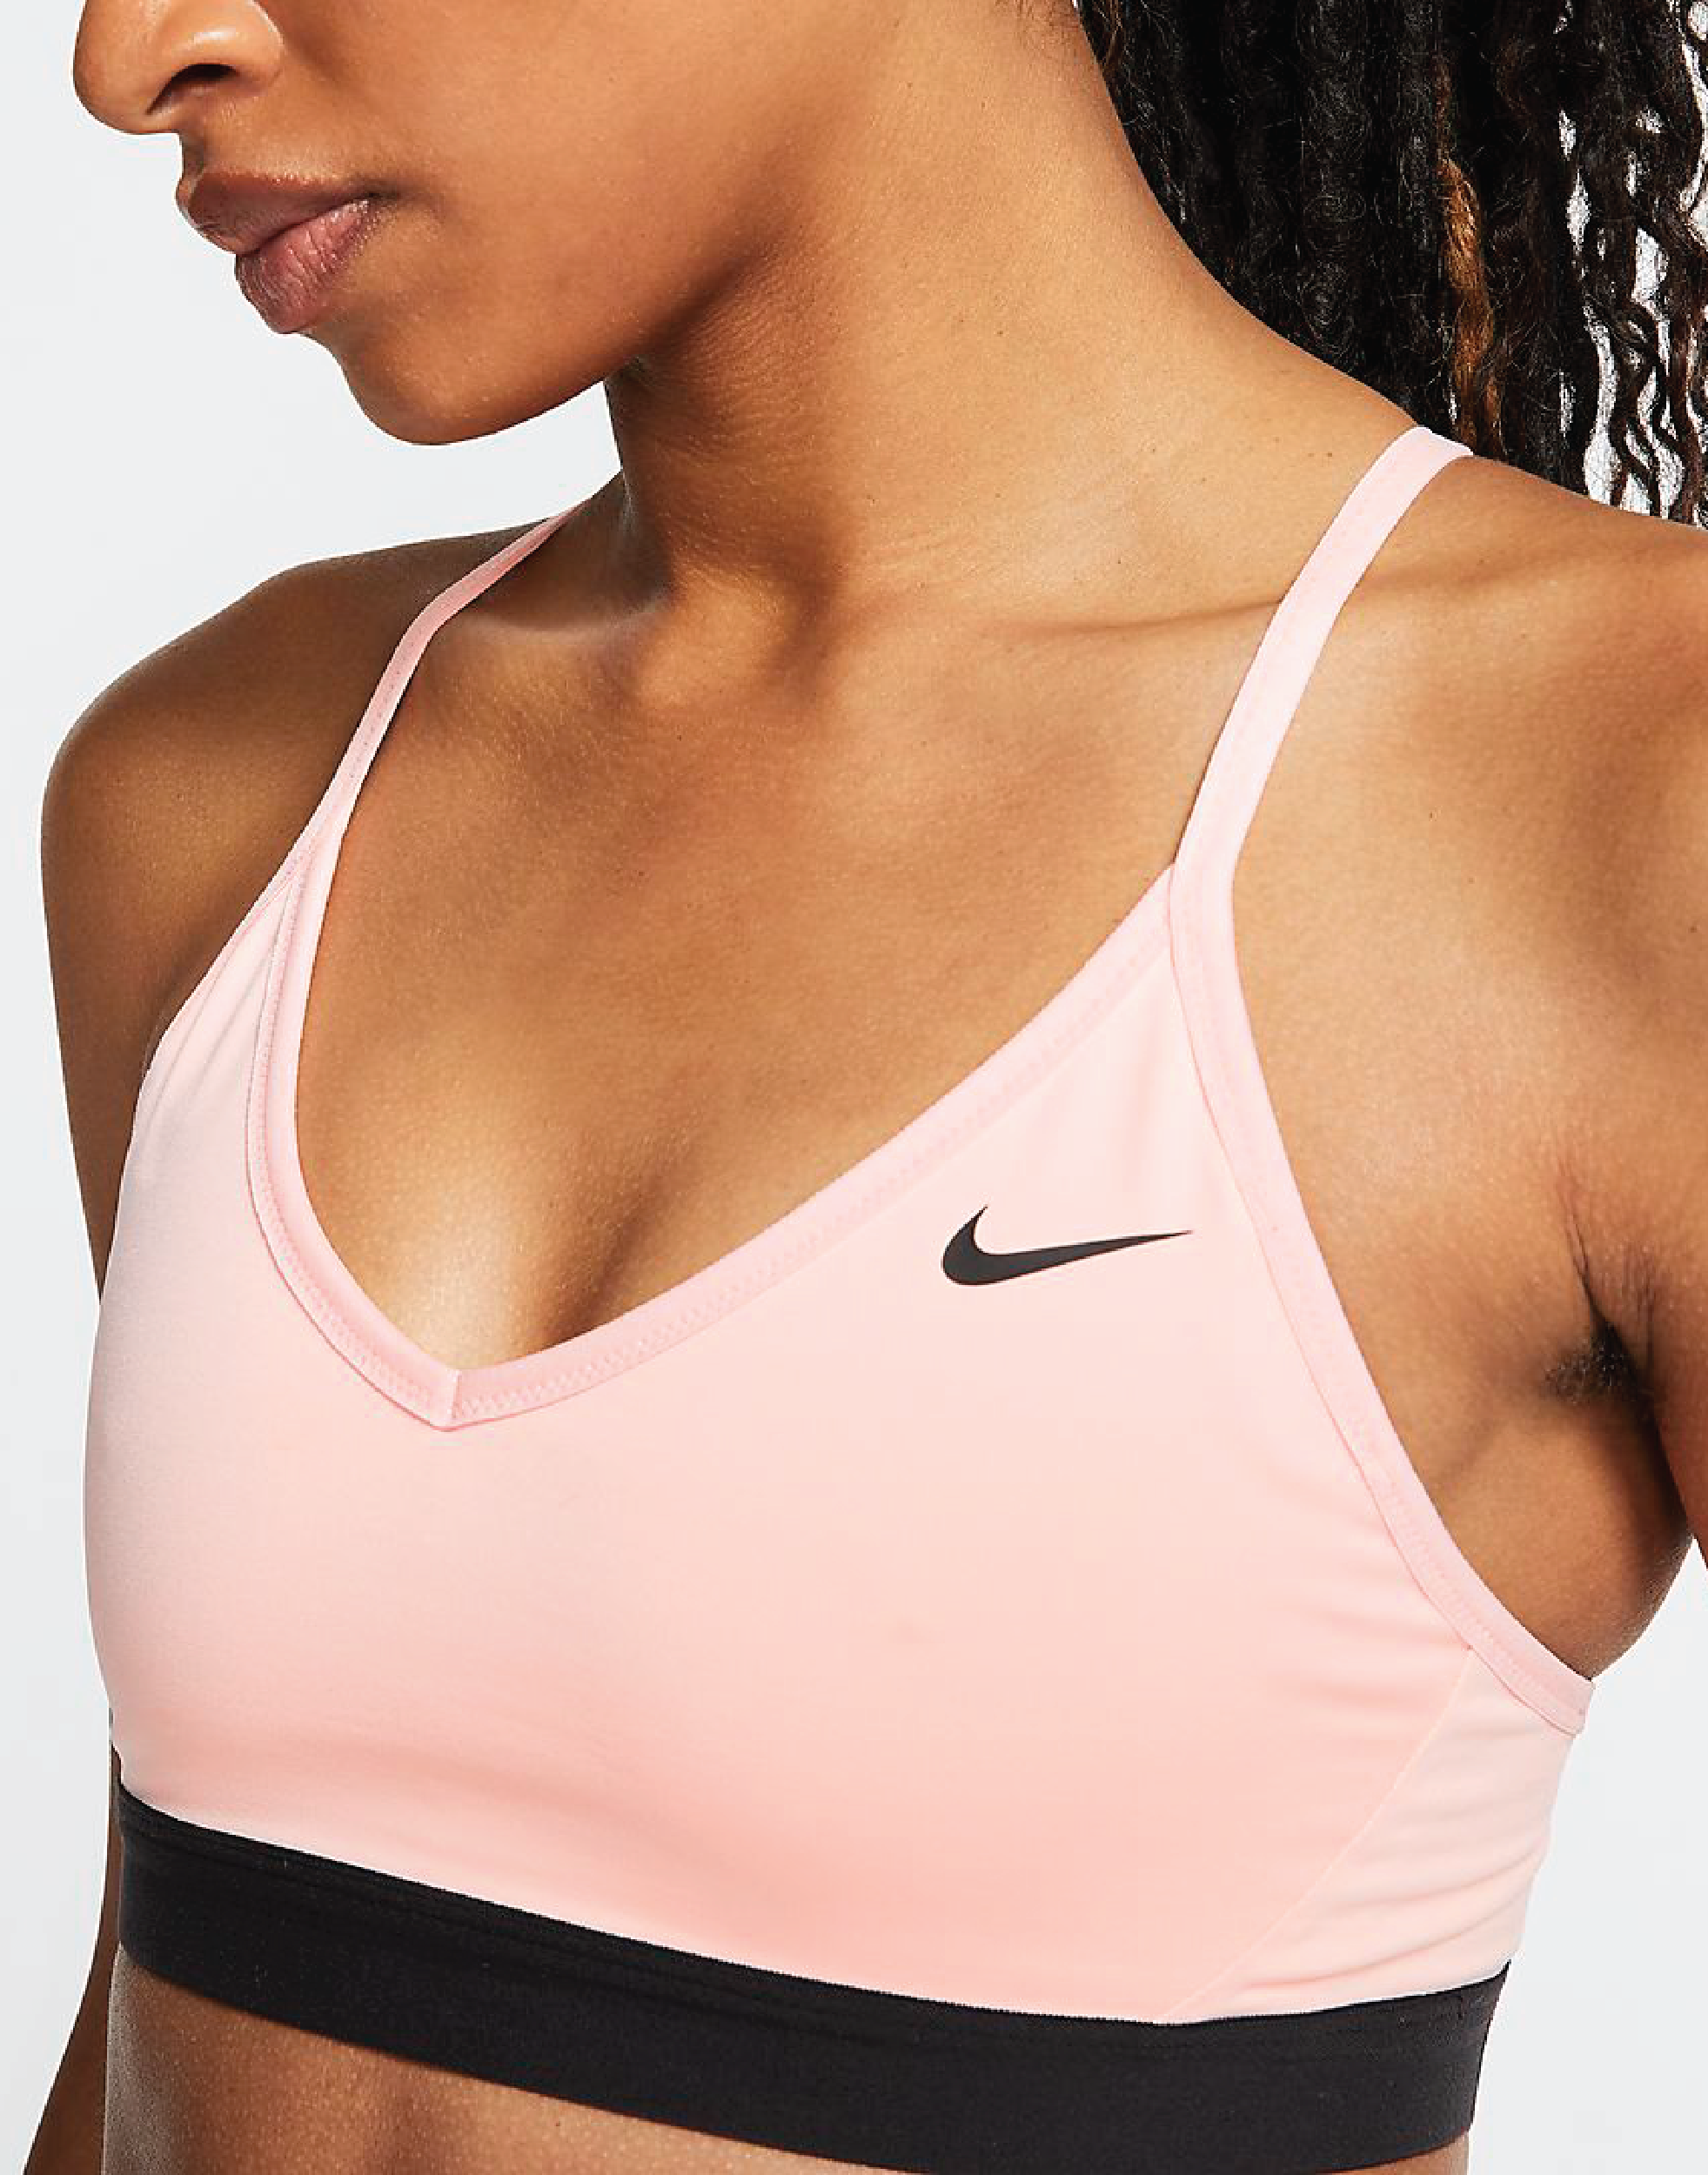 A pink bra with a Black Nike swoosh hand elastic bannd